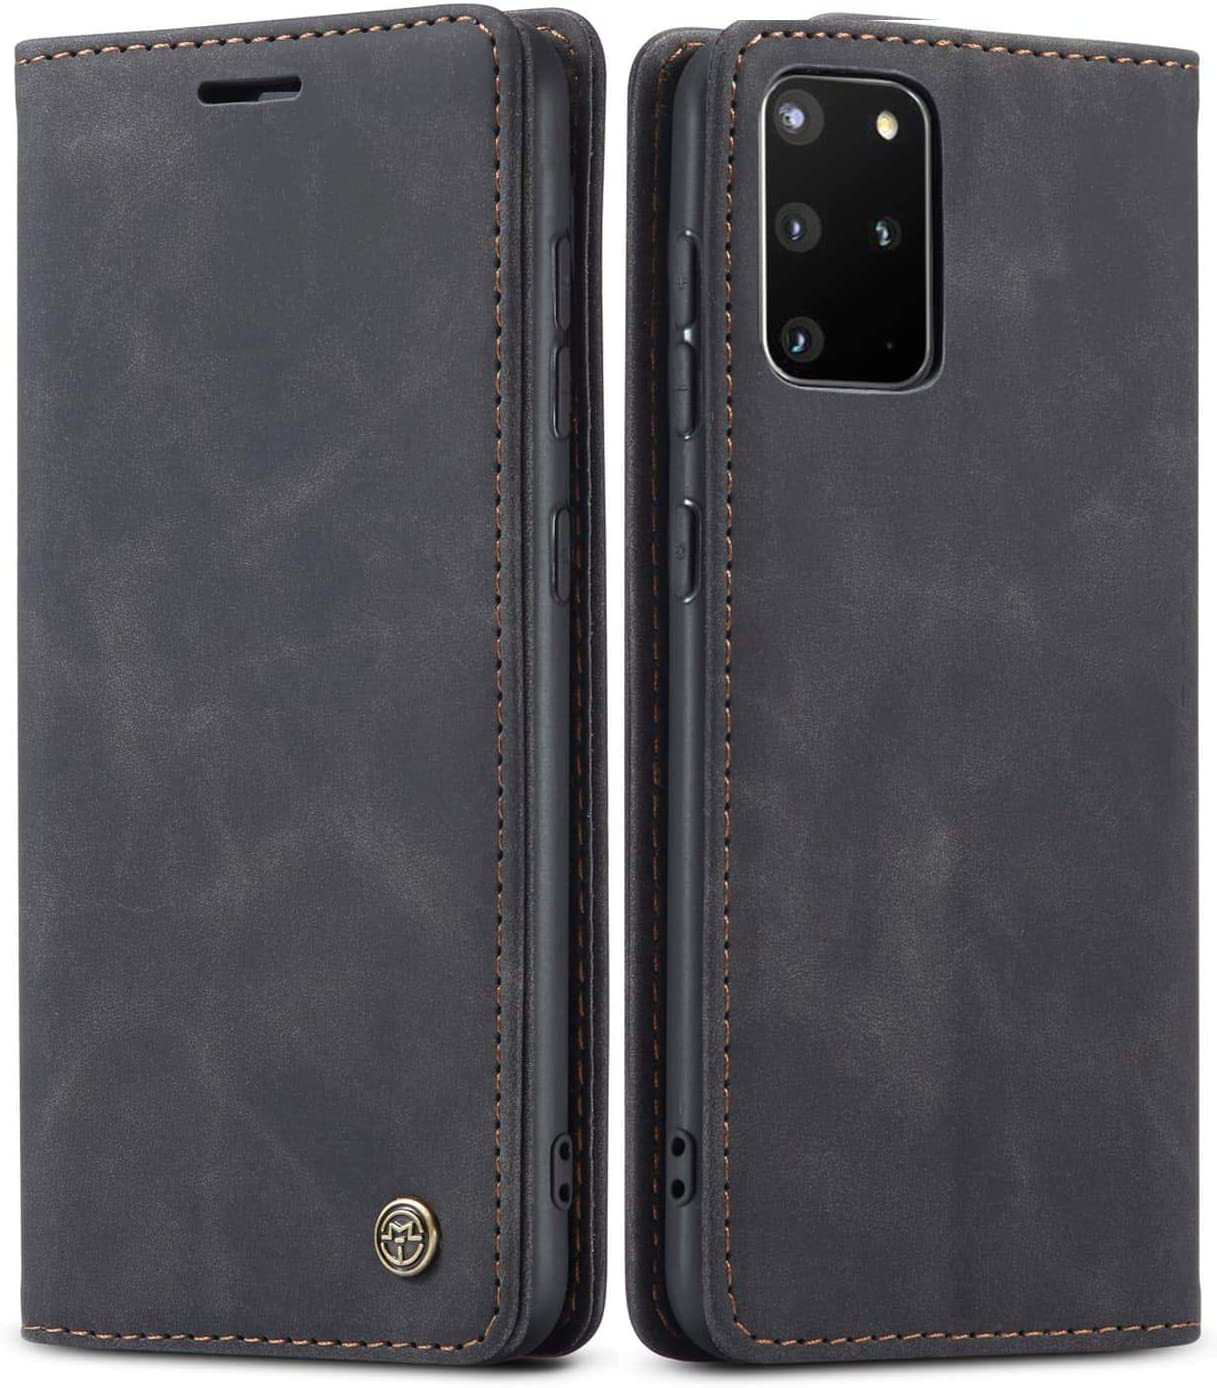 Samsung Galaxy S20 Plus high quality unique designer case cover